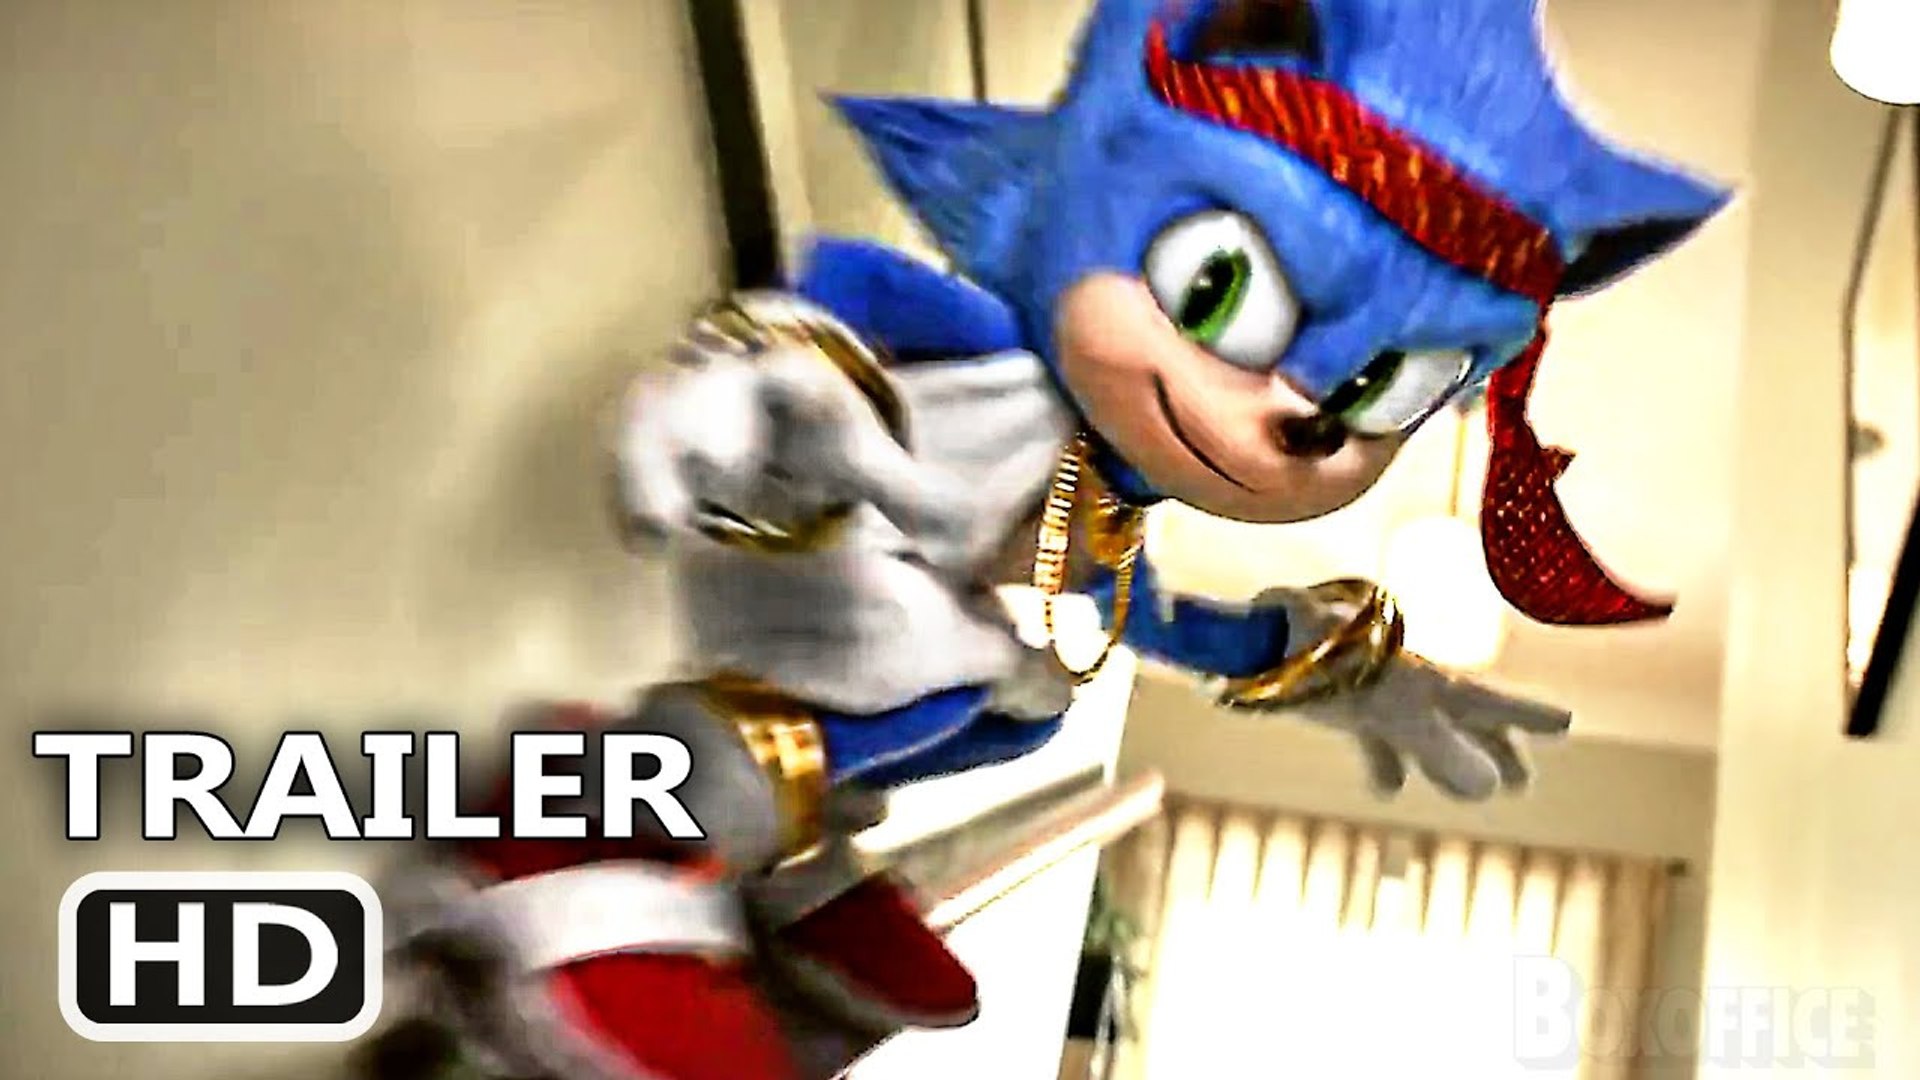 Sonic the Hedgehog 2 lança trailer